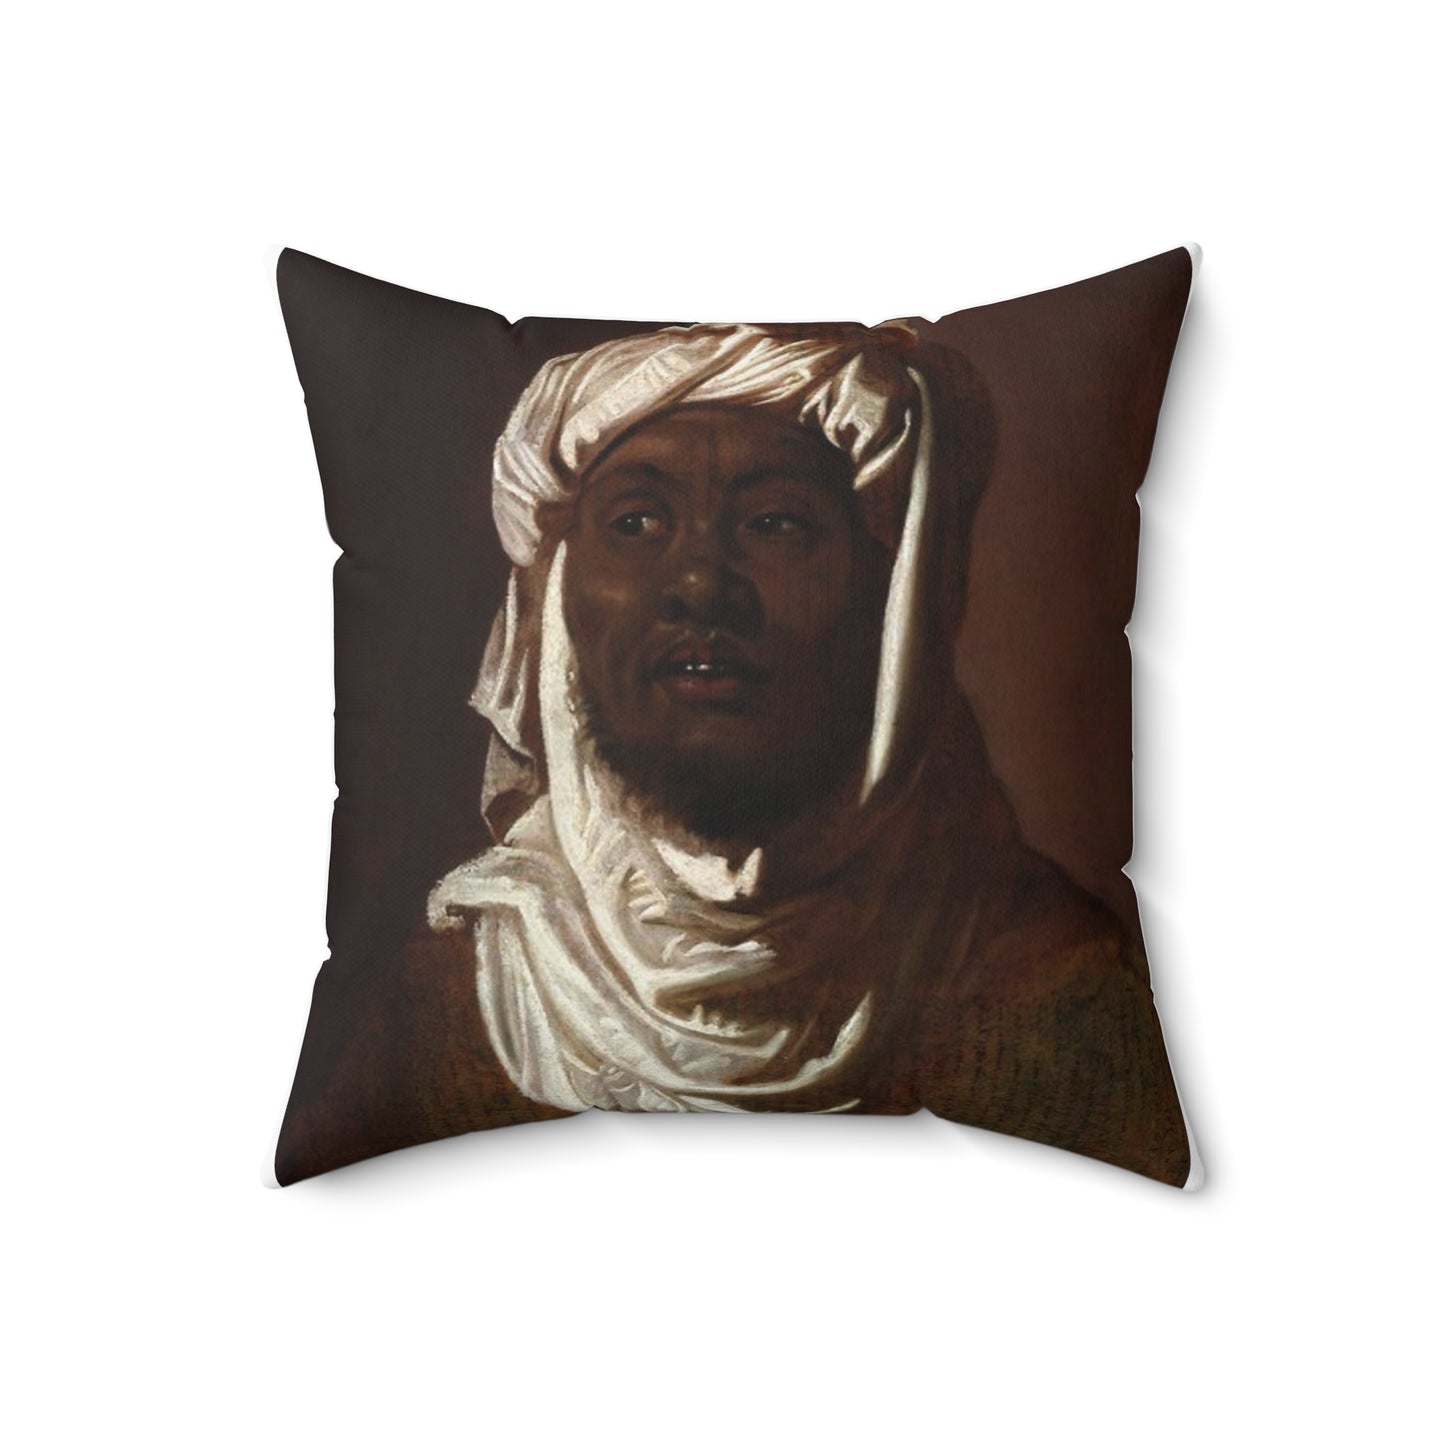 Portrait Of a Moorish Man Wearing A Turban- Square Pillow